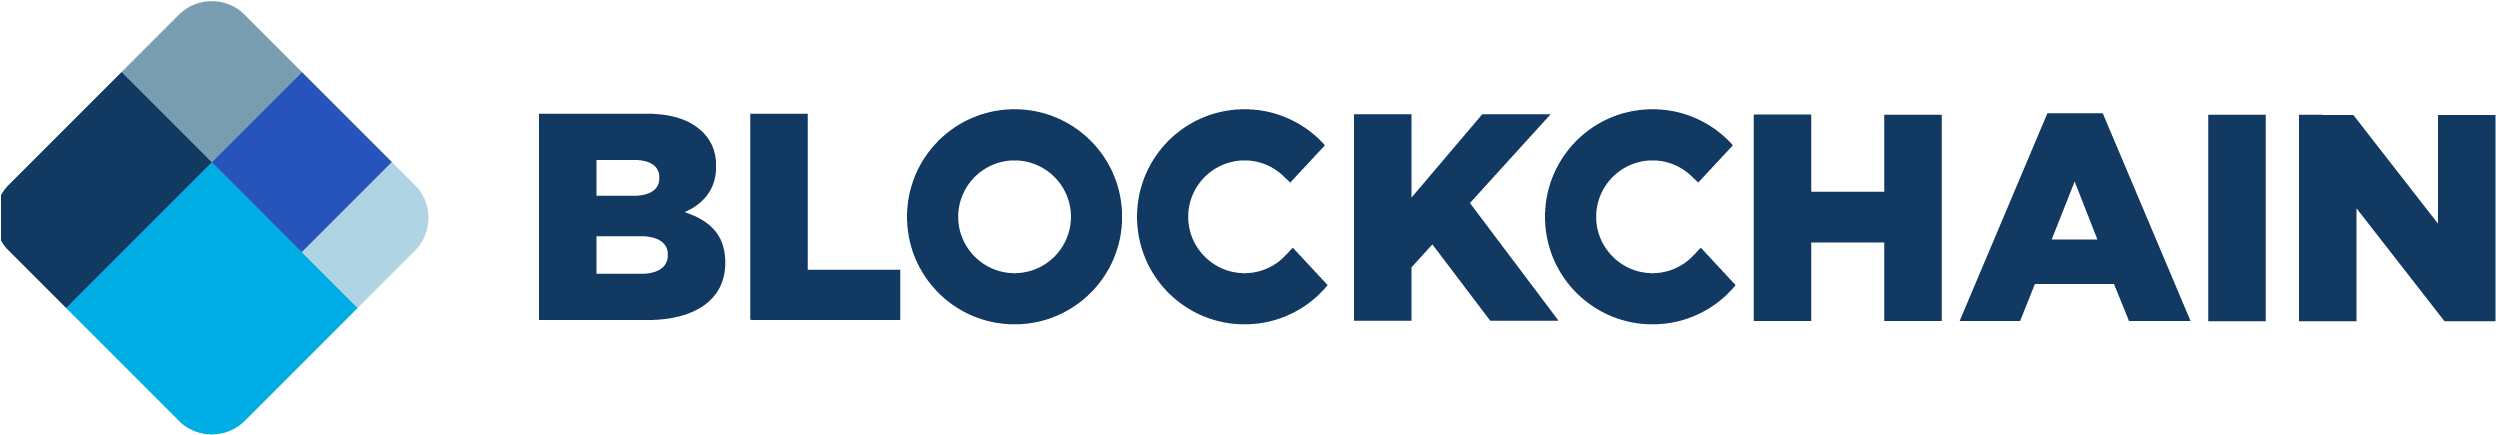 Blockchain Logo Design PNG